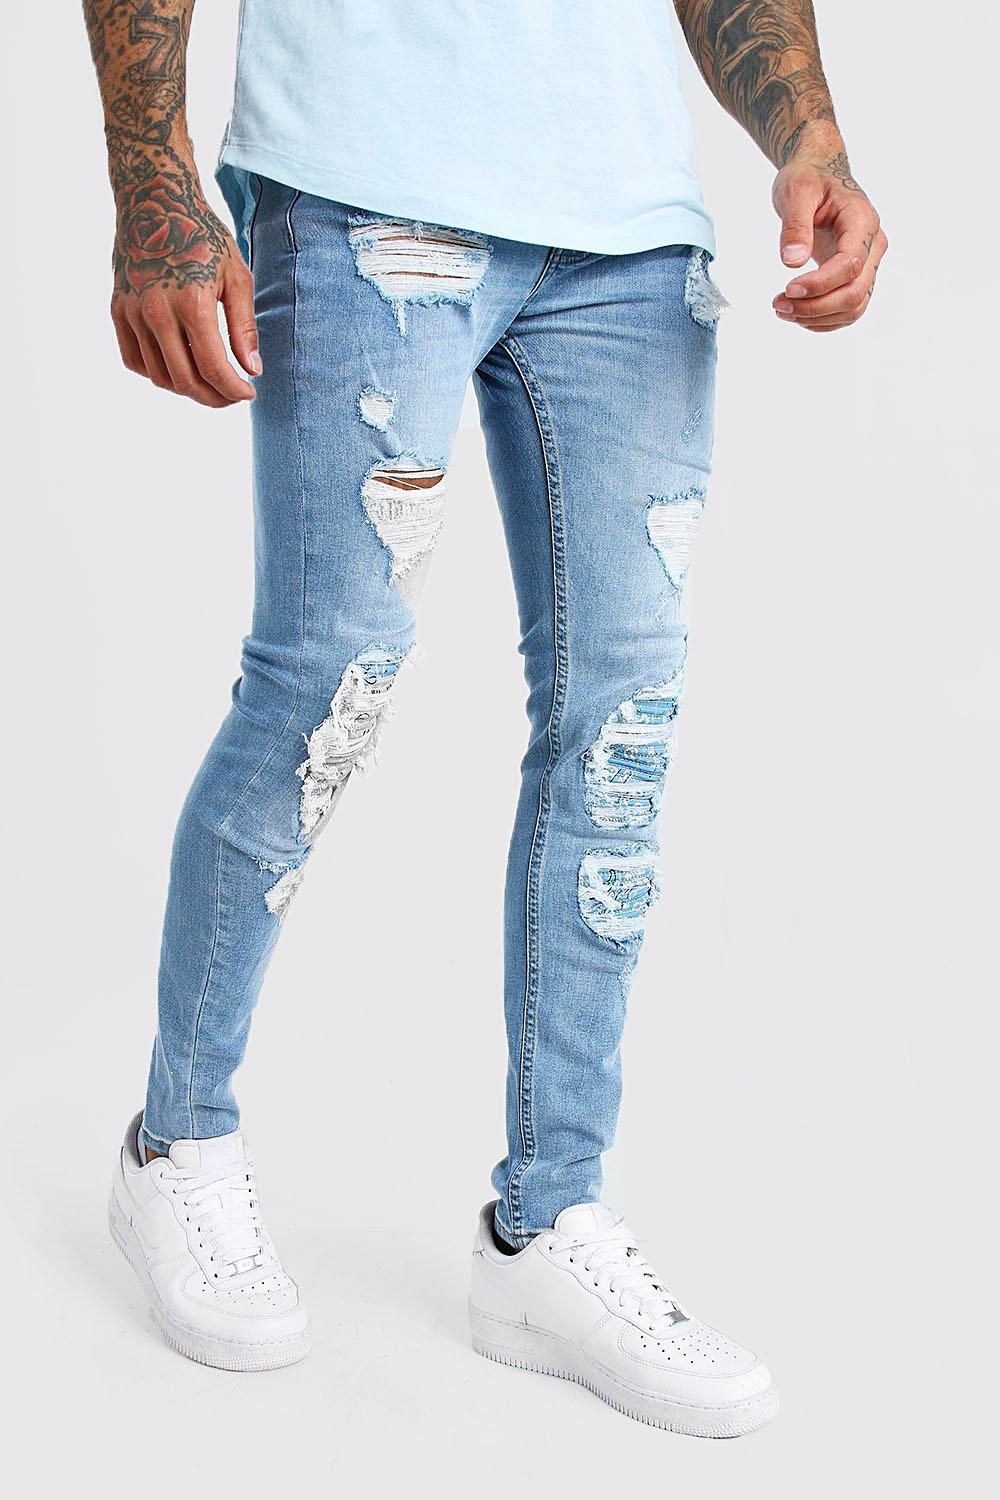 boohoo mens jeans sale